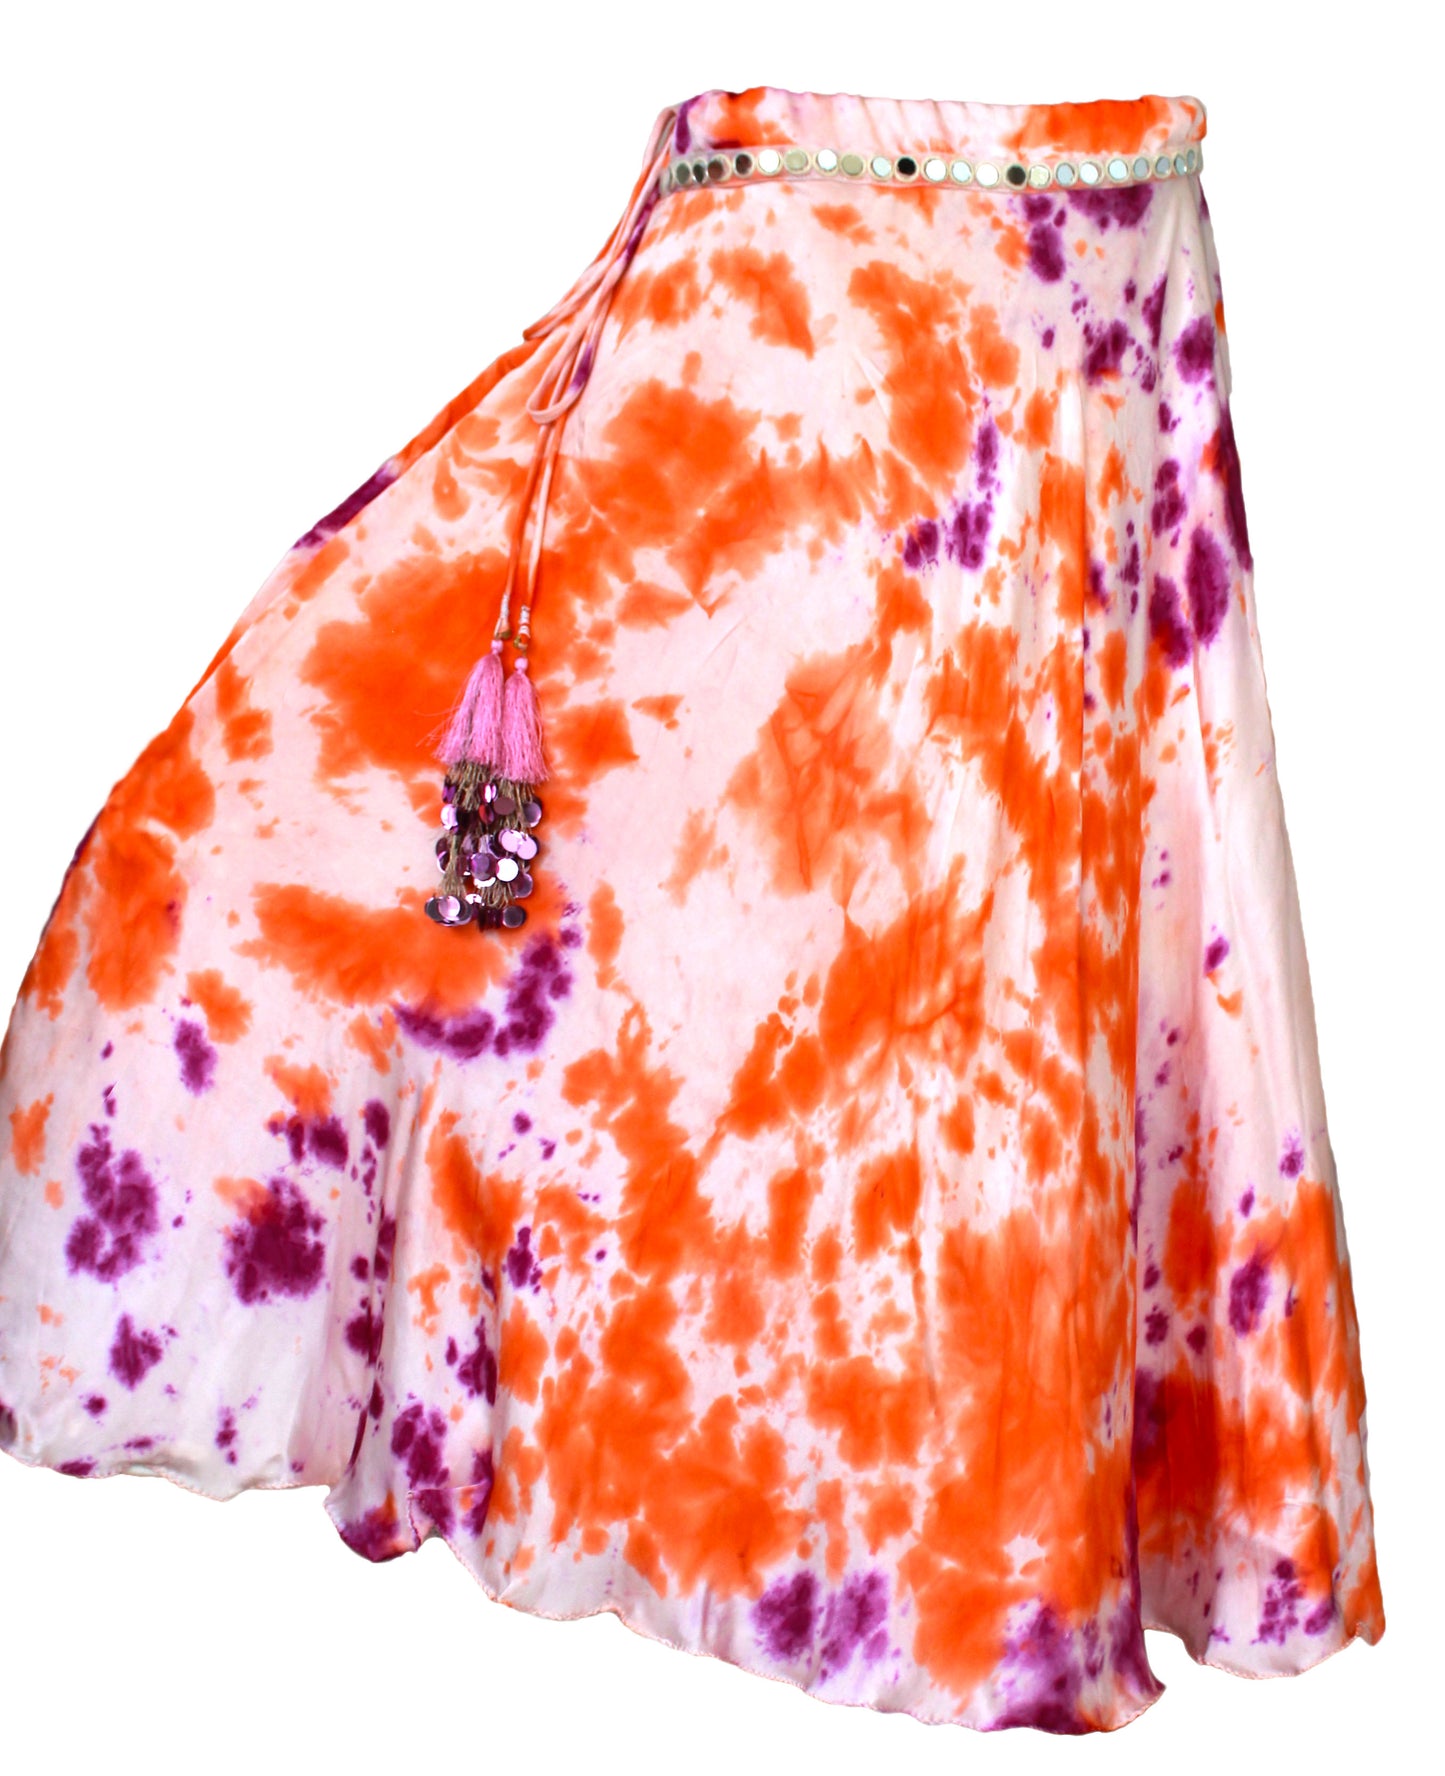 Hand Tie & Dye Lehenga Skirt Maxi Festive Indian Heavy fancy Pendant Long Flaring Drawstring Party Ethnic - AMS21273